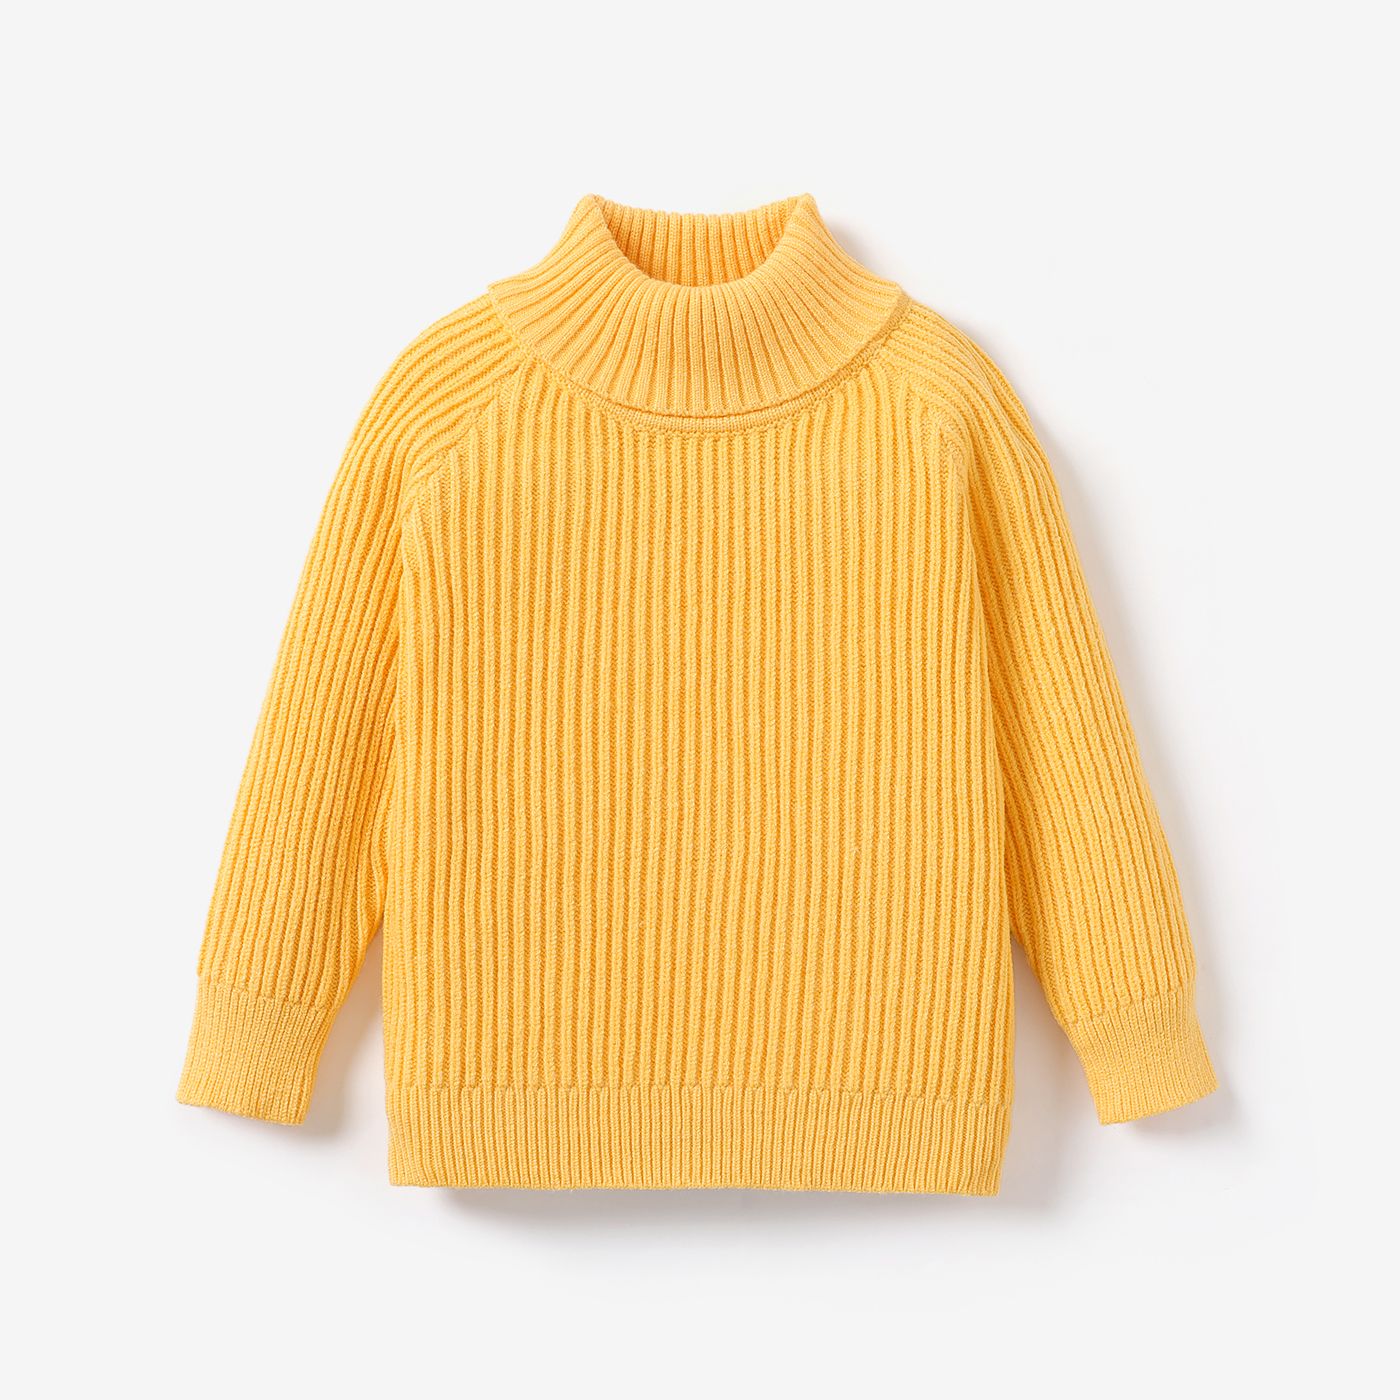 Toddler Girl/Toddler Boy Basic Solid Color Knit Sweater